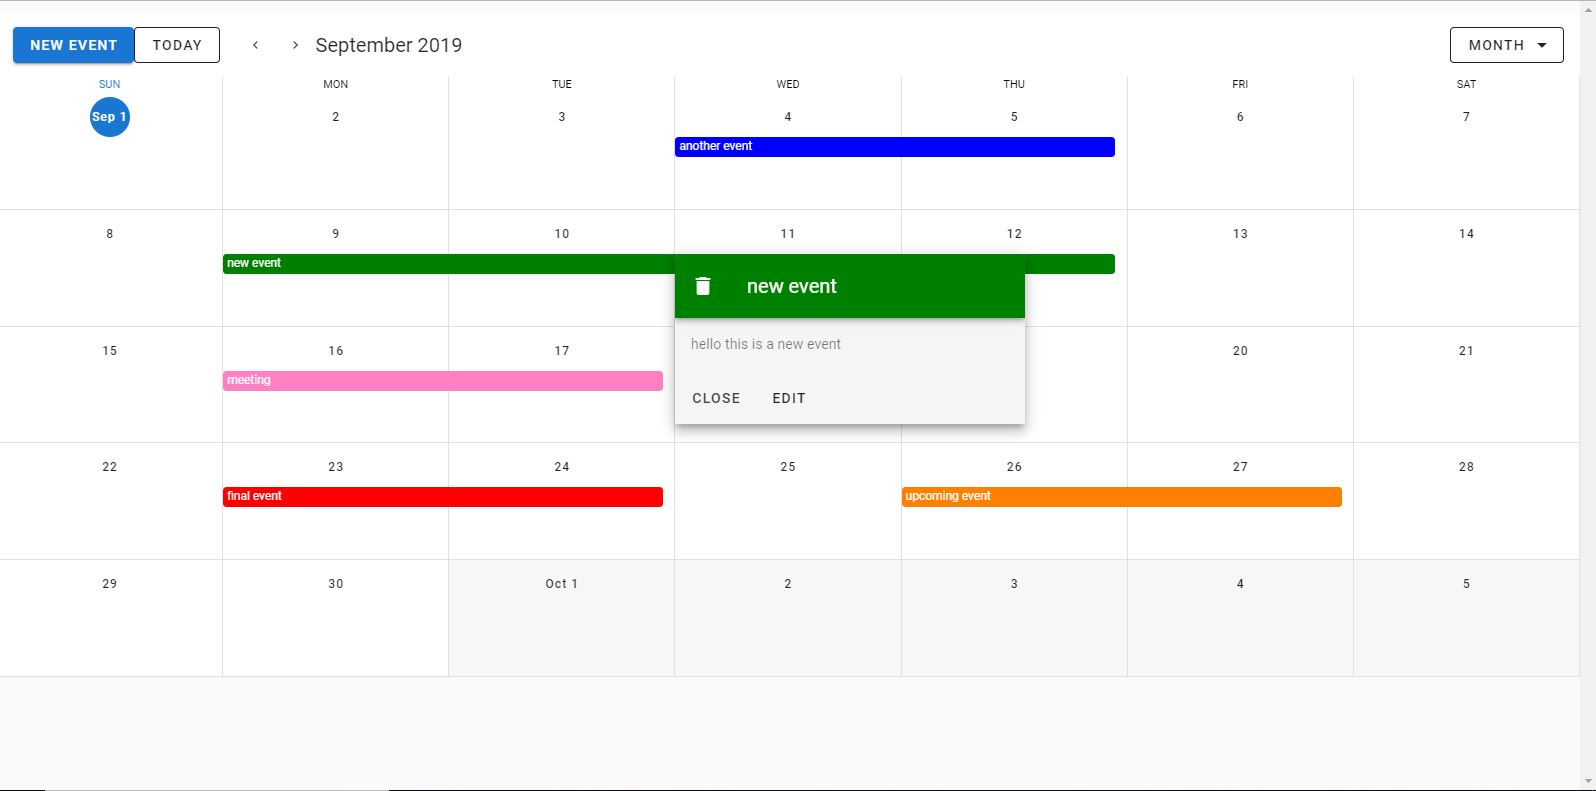 GitHub losfodo/calendarvuetify